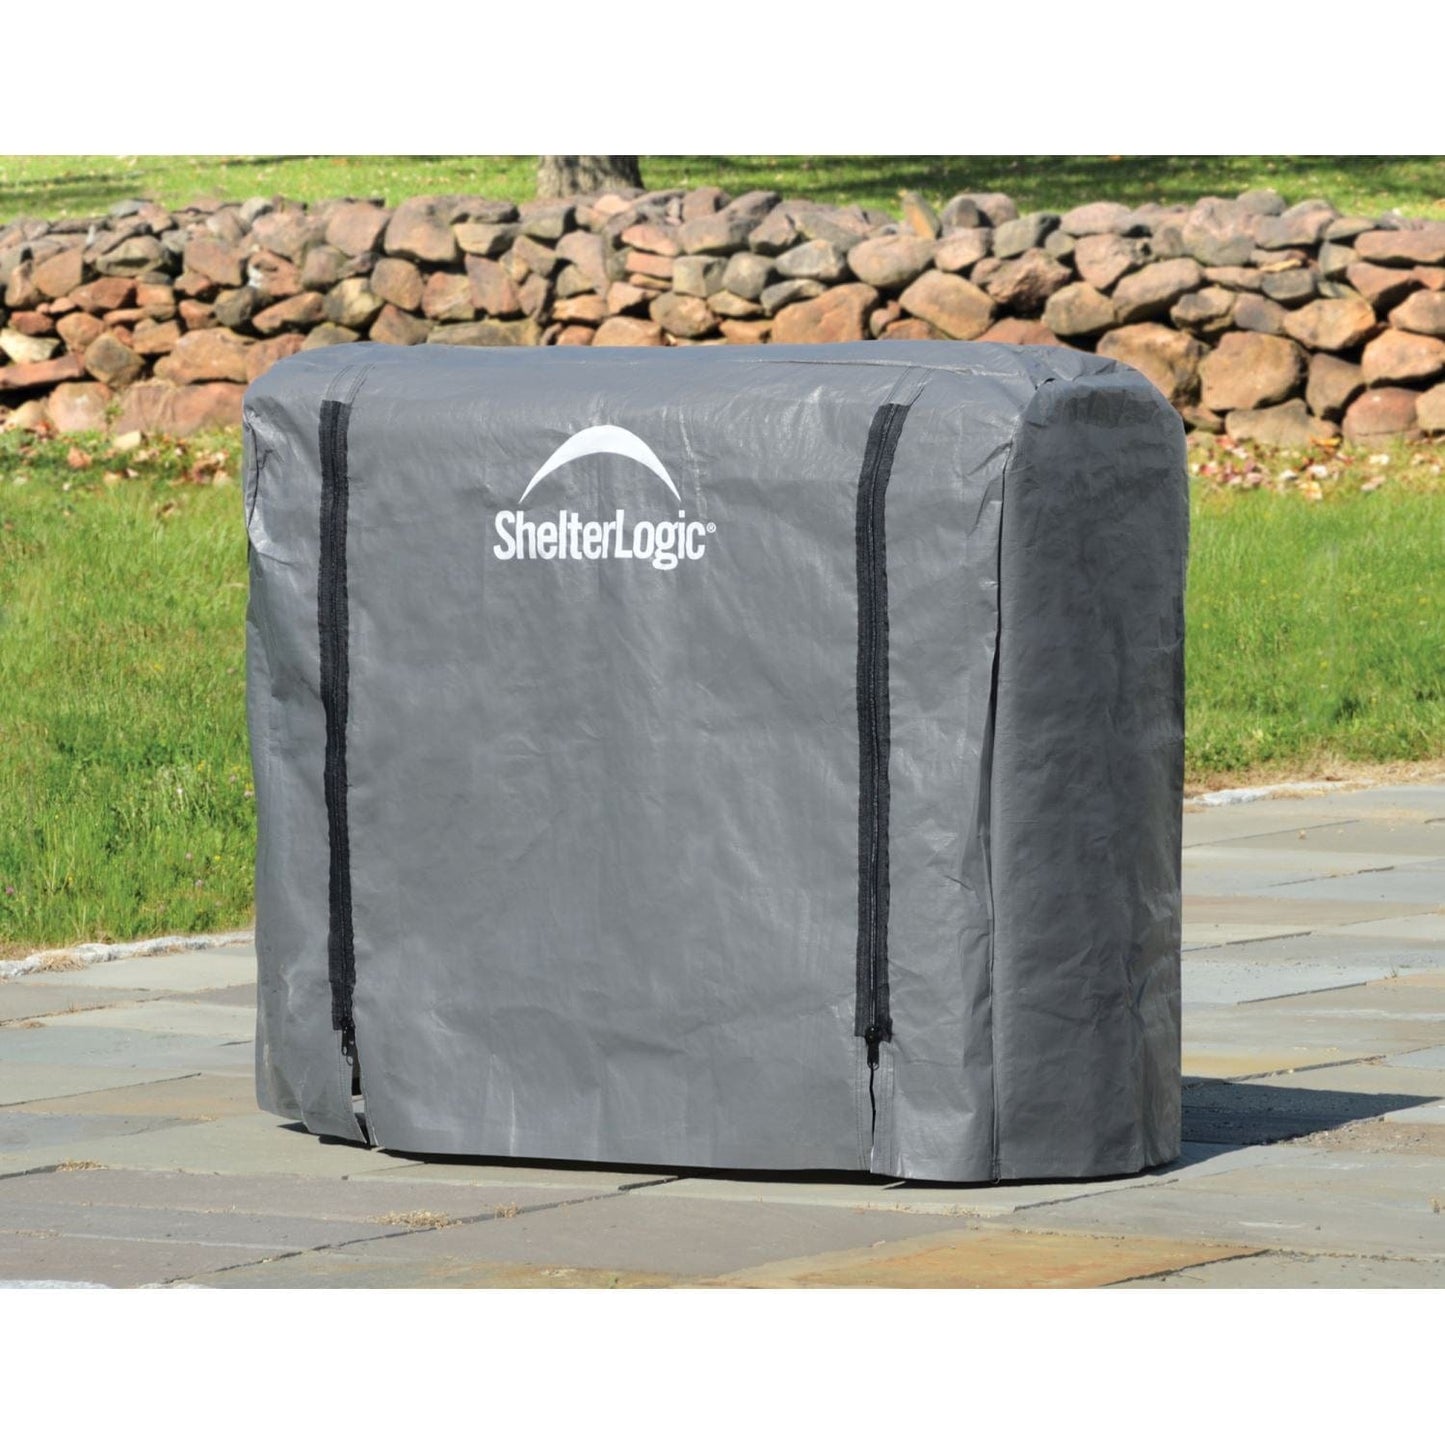 ShelterLogic Firewood & Hearth Products SheltLogic Firewood Rack Full Length Cover 4 ft. 90477